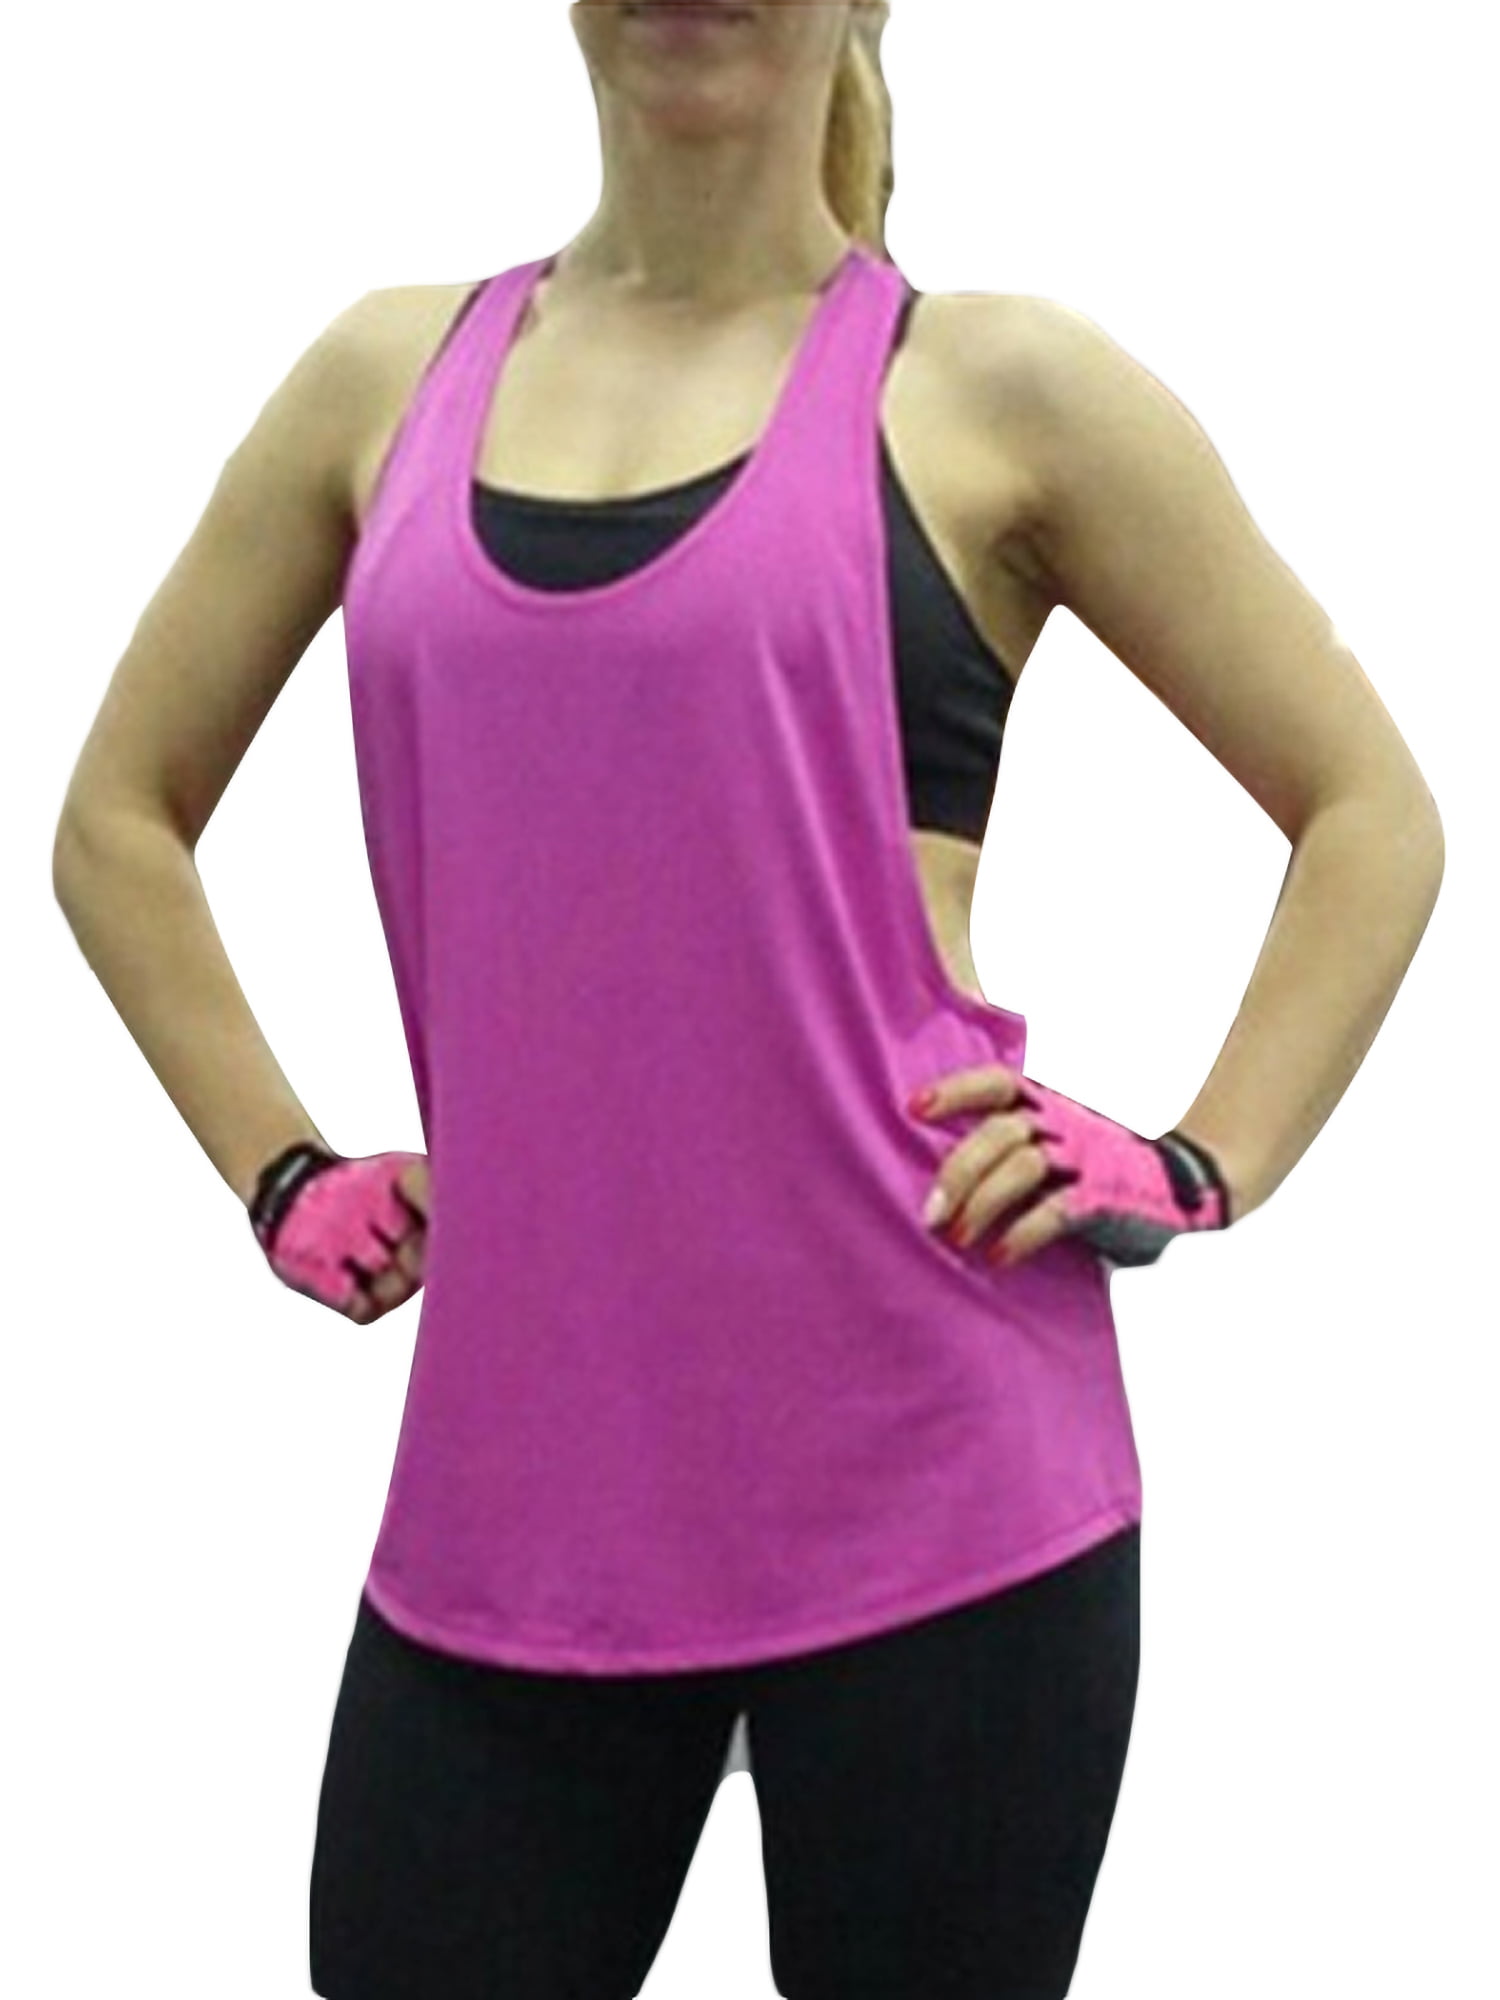 POTO Workout Tank Tops for Women Racerback Sleeveless Shirts Yoga Running Jogging Athletic Dressy Tank Tops Plus Size 